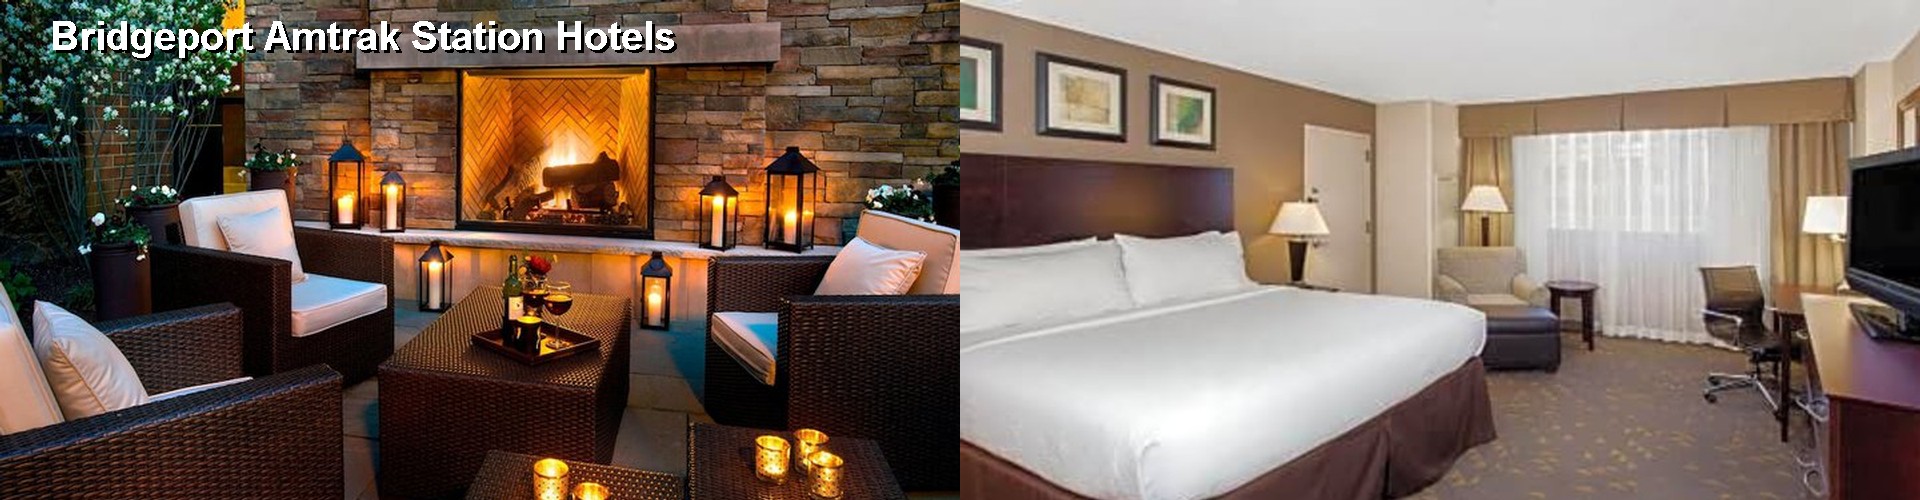 5 Best Hotels near Bridgeport Amtrak Station